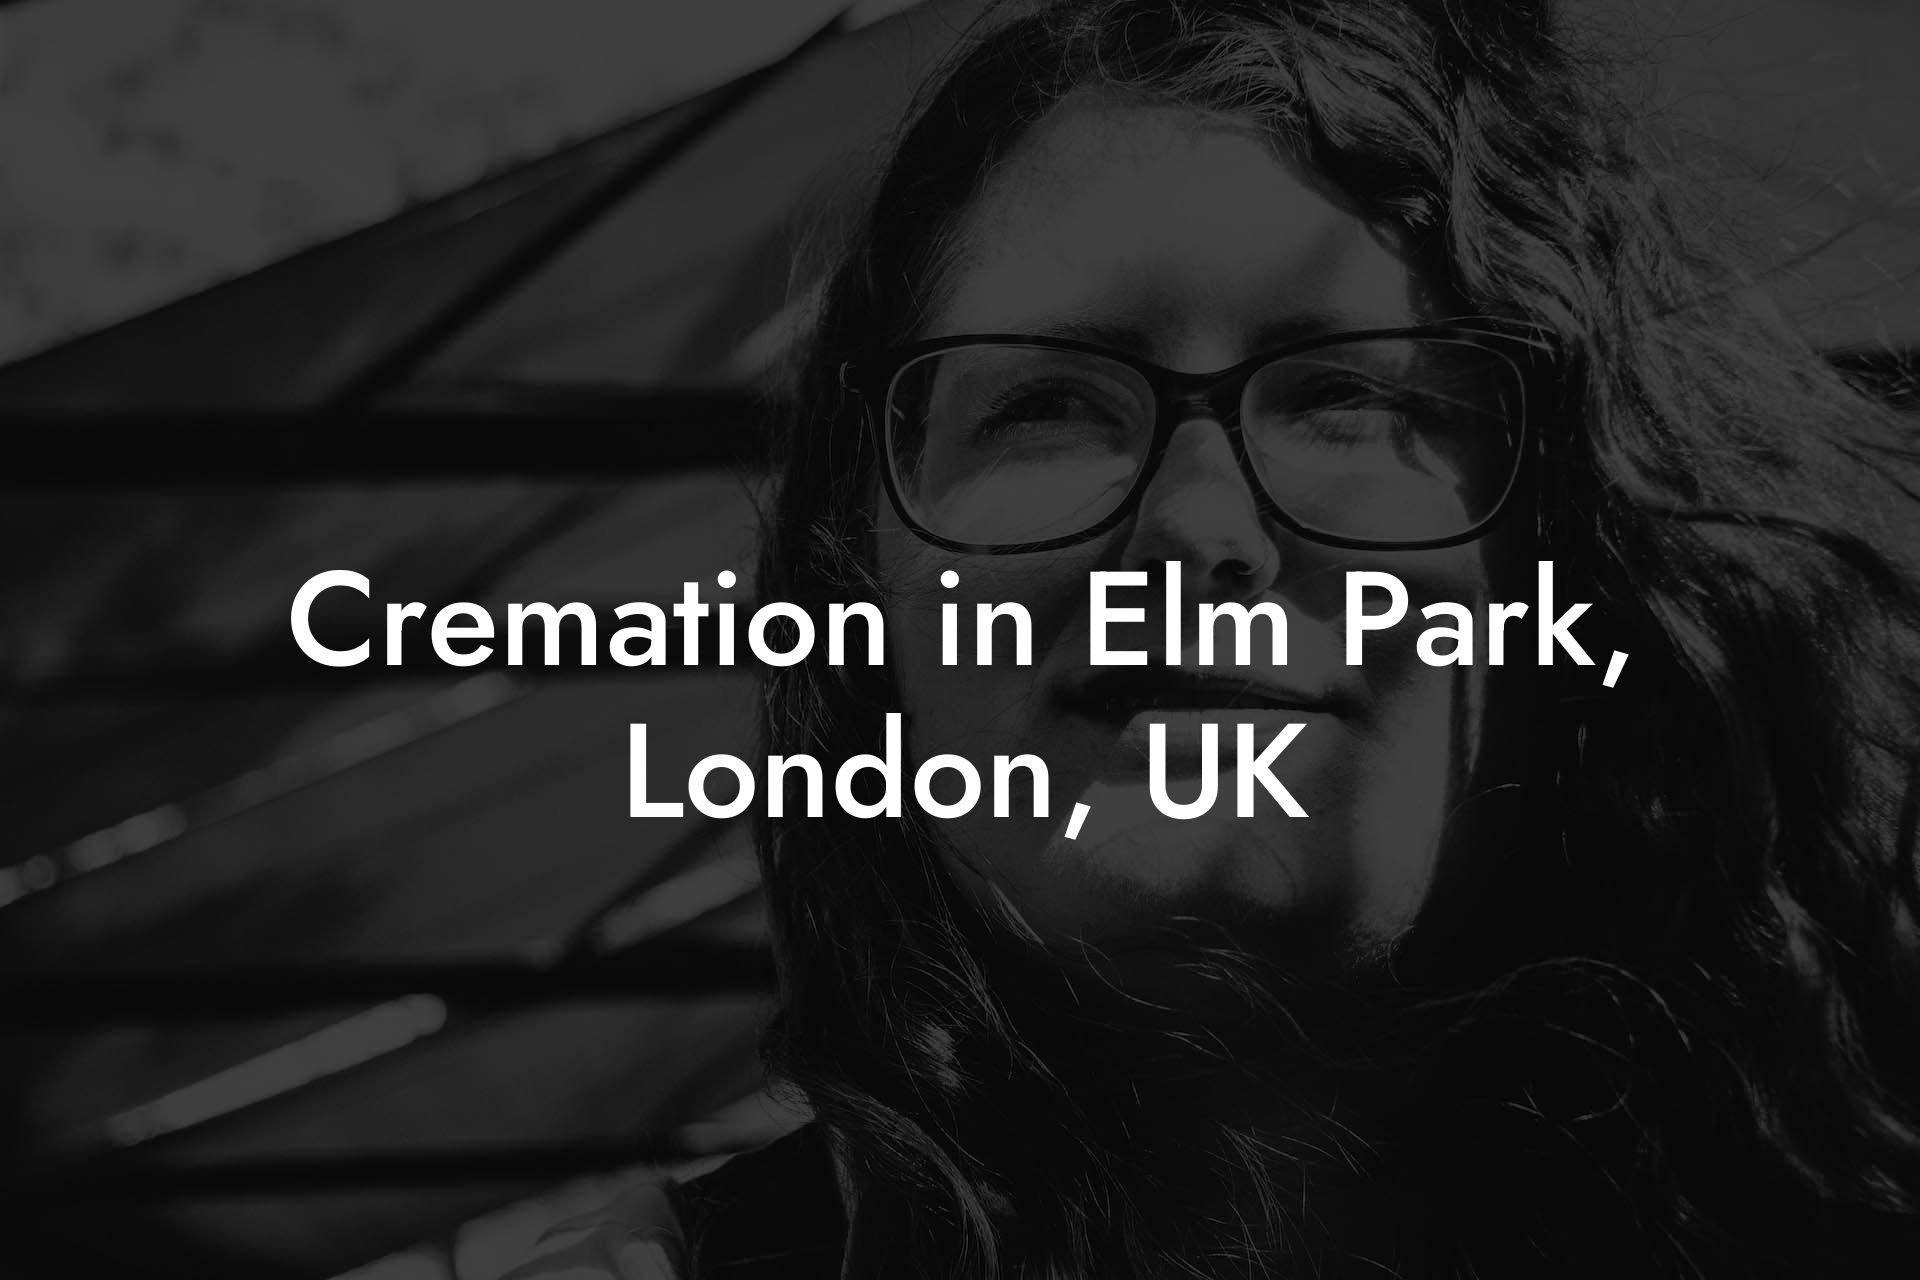 Cremation in Elm Park, London, UK